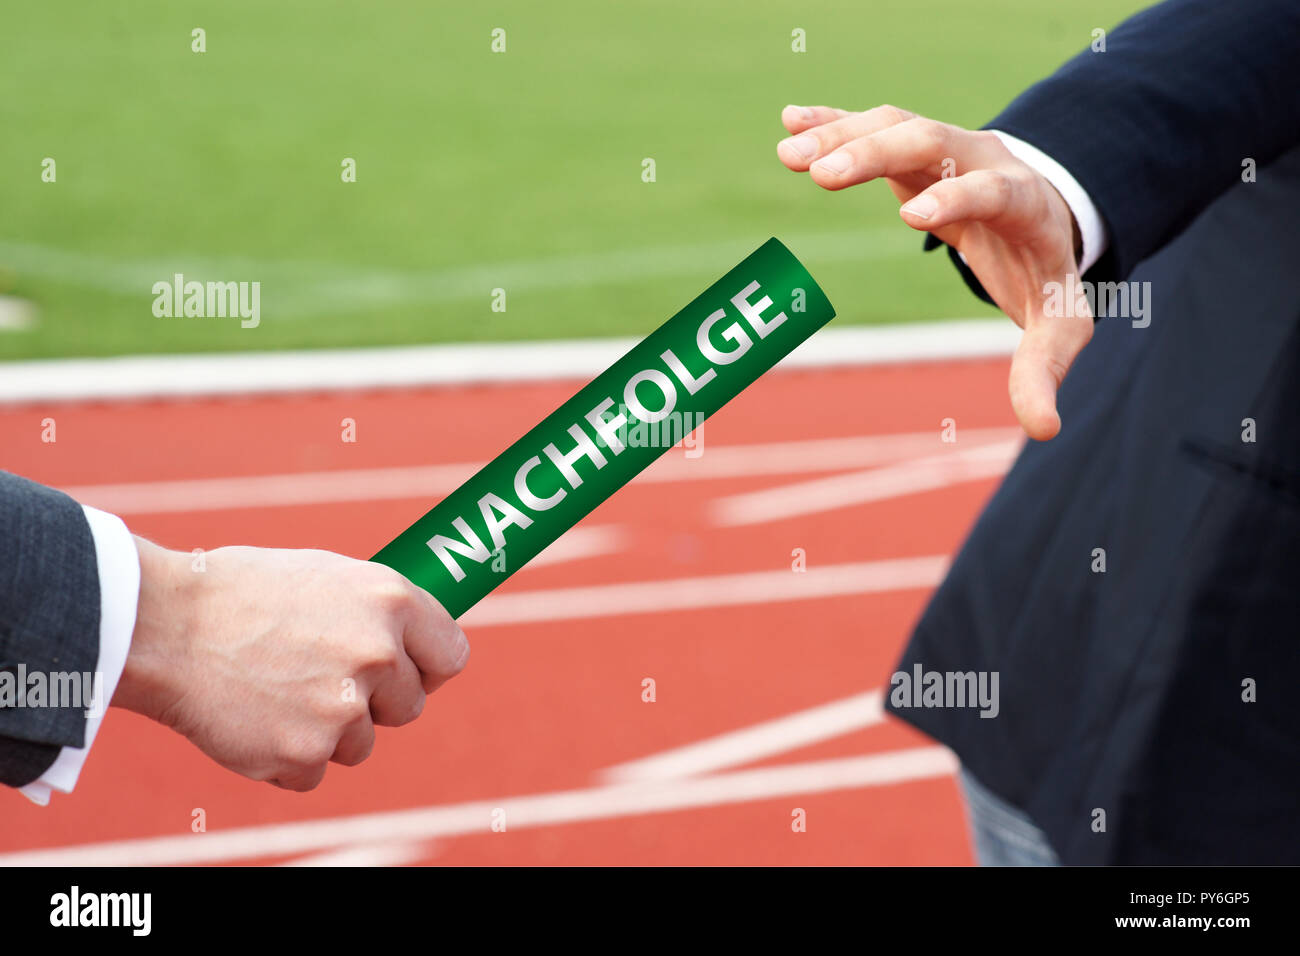 Businessmen passing green baton with german word - Nachfolge Stock Photo